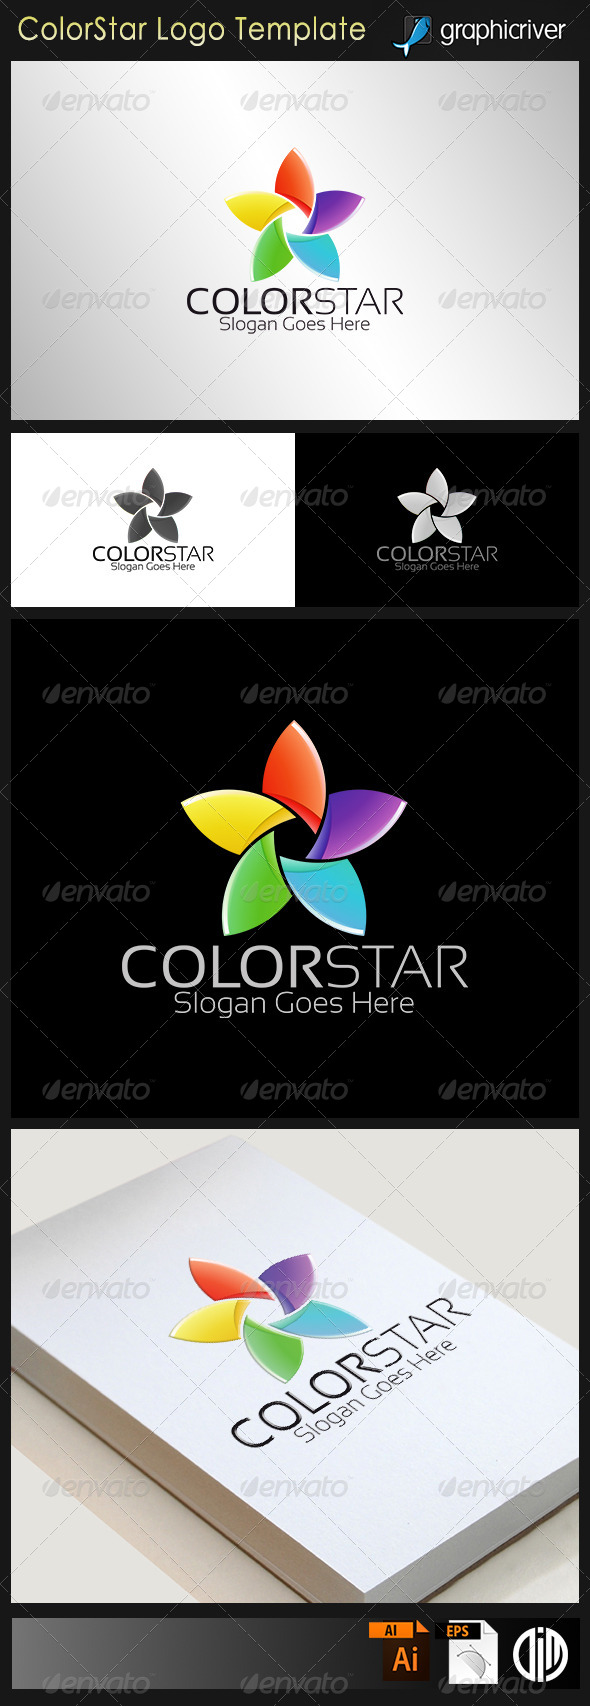 Color Star Logo